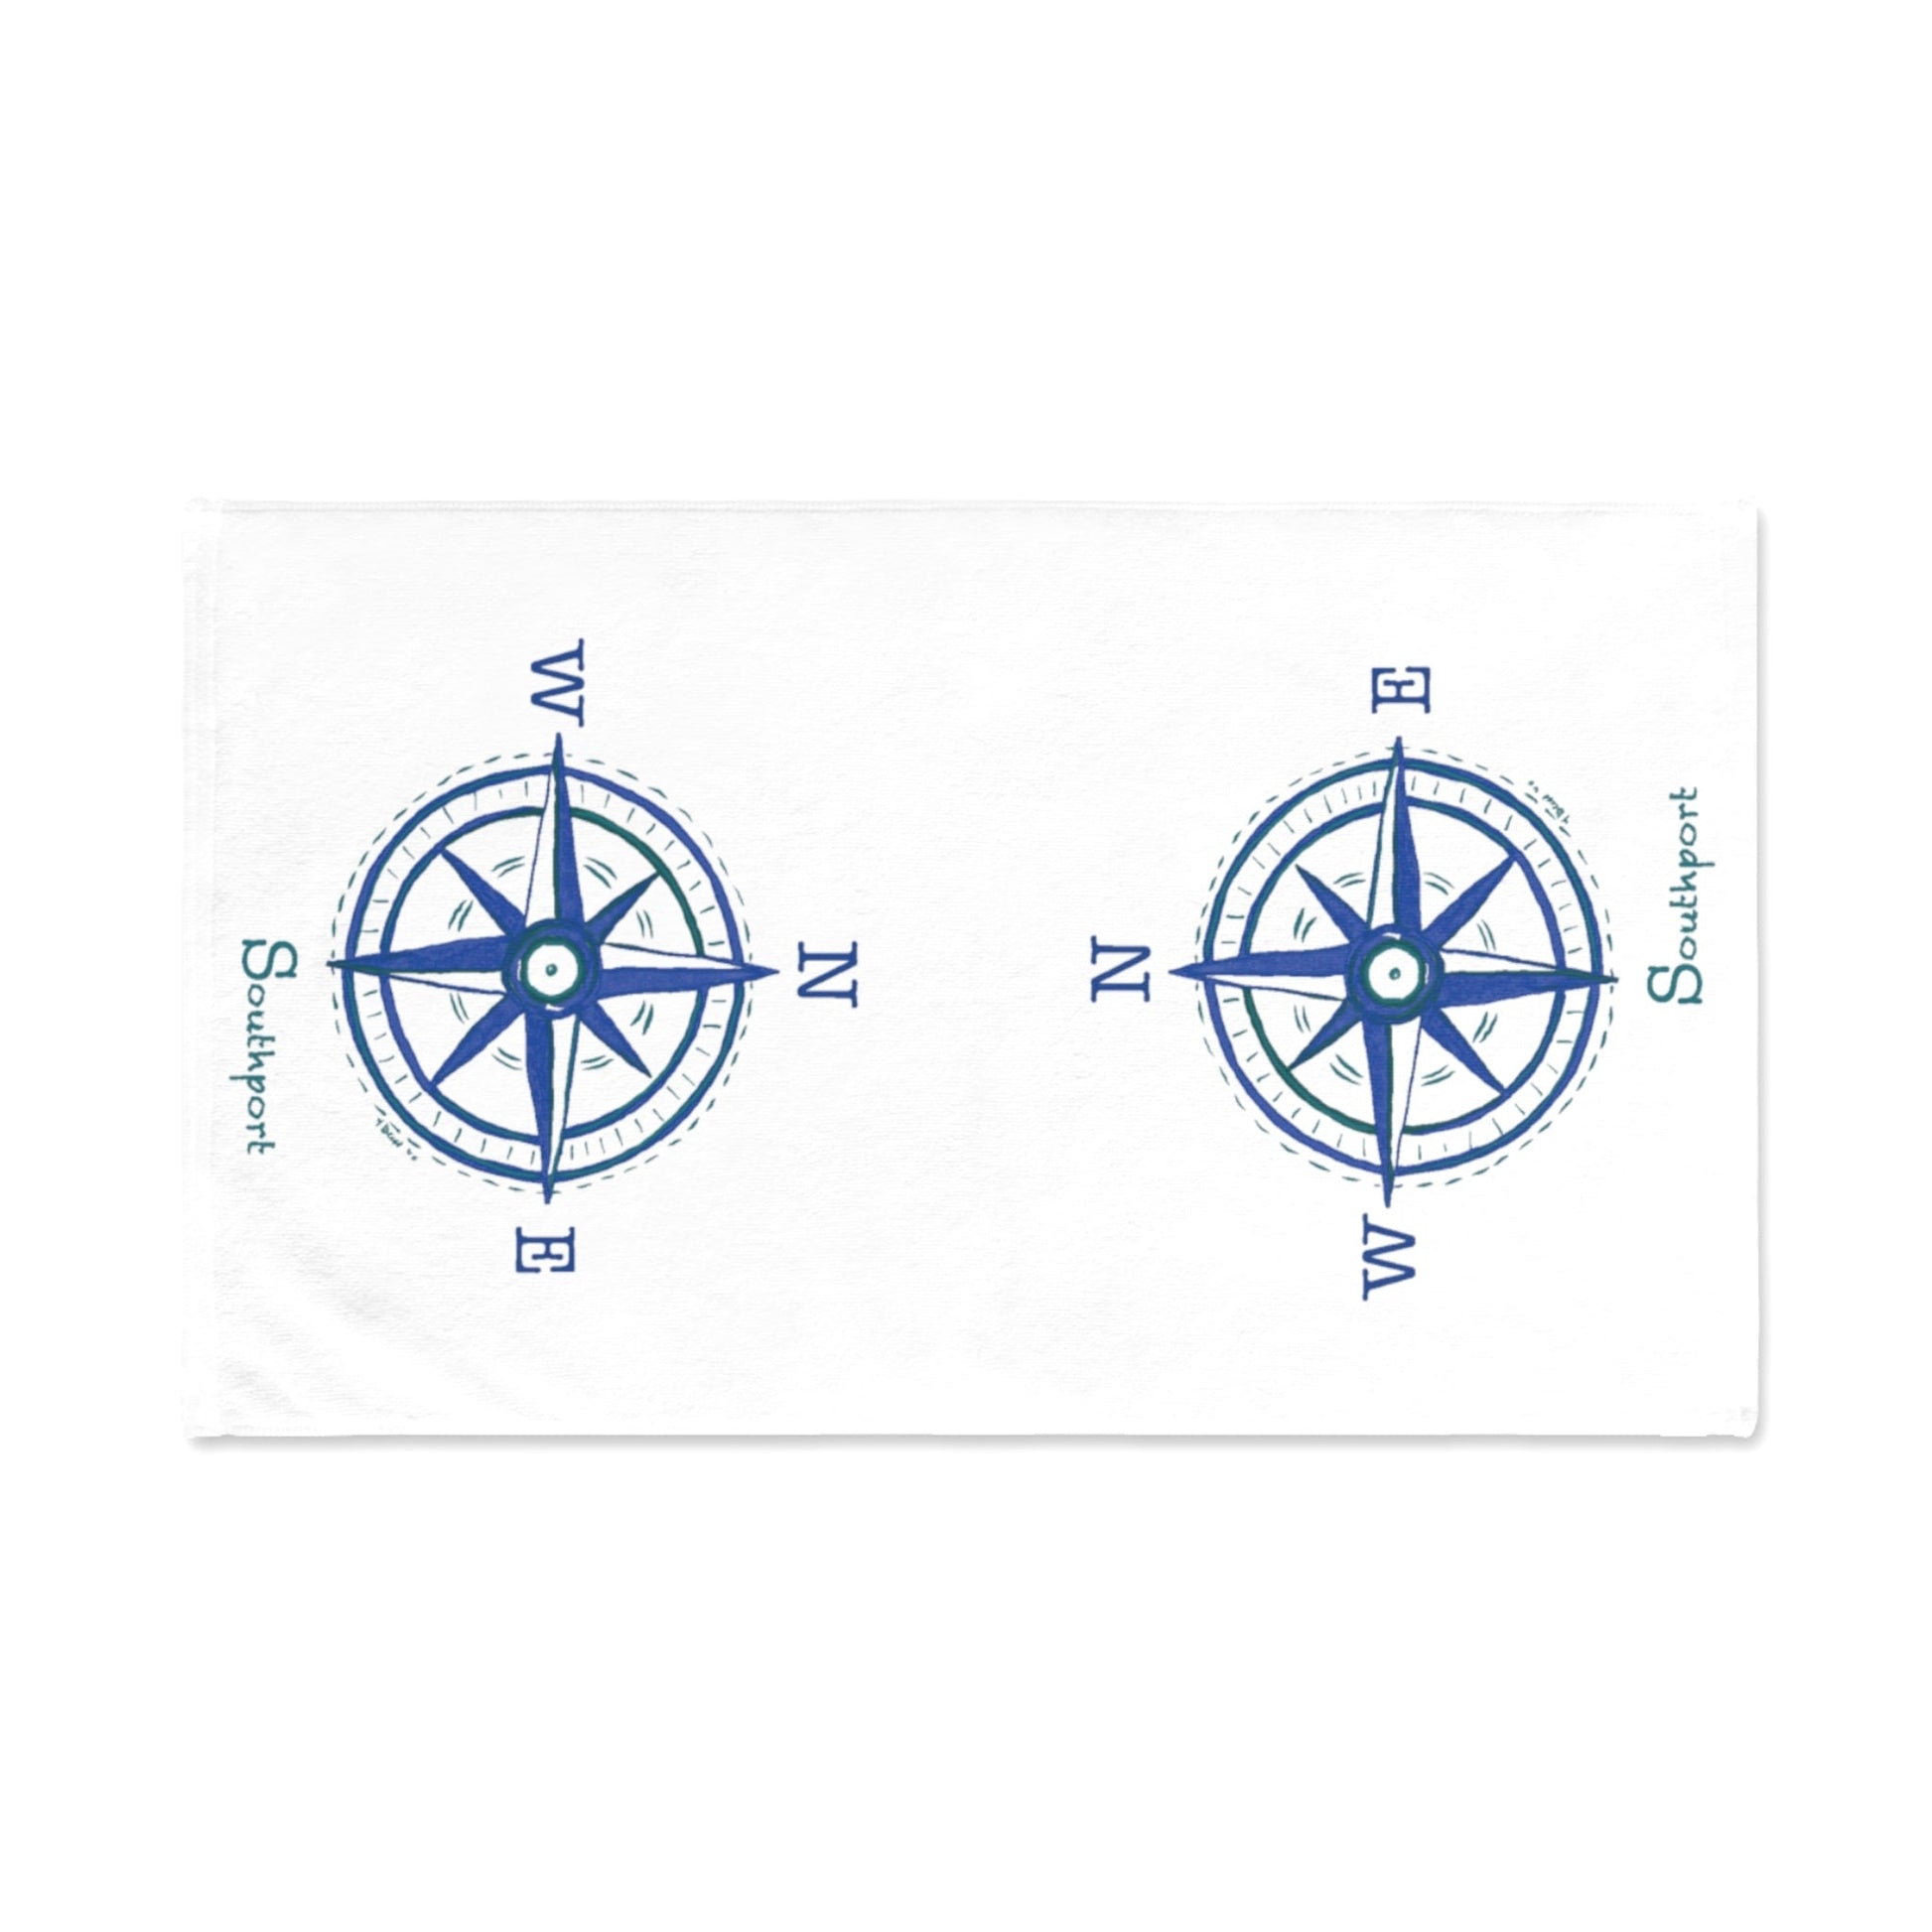 Southport Compass Hand Towel (Poly/Cotton) - Blue Cava